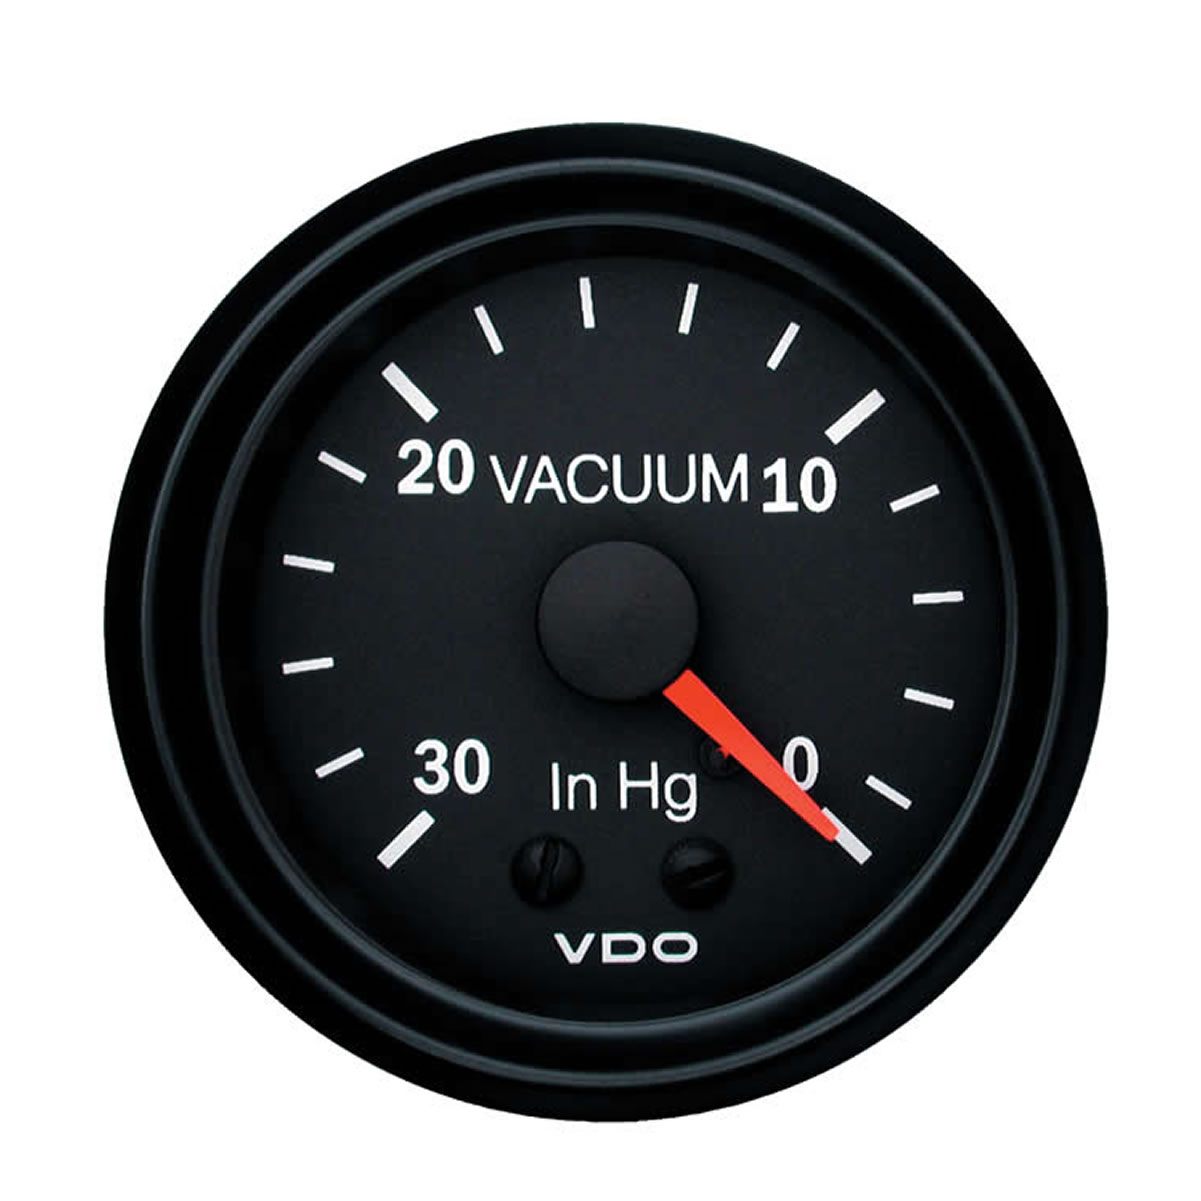 VDO Vacuum Gauge 30 to 0 Bar